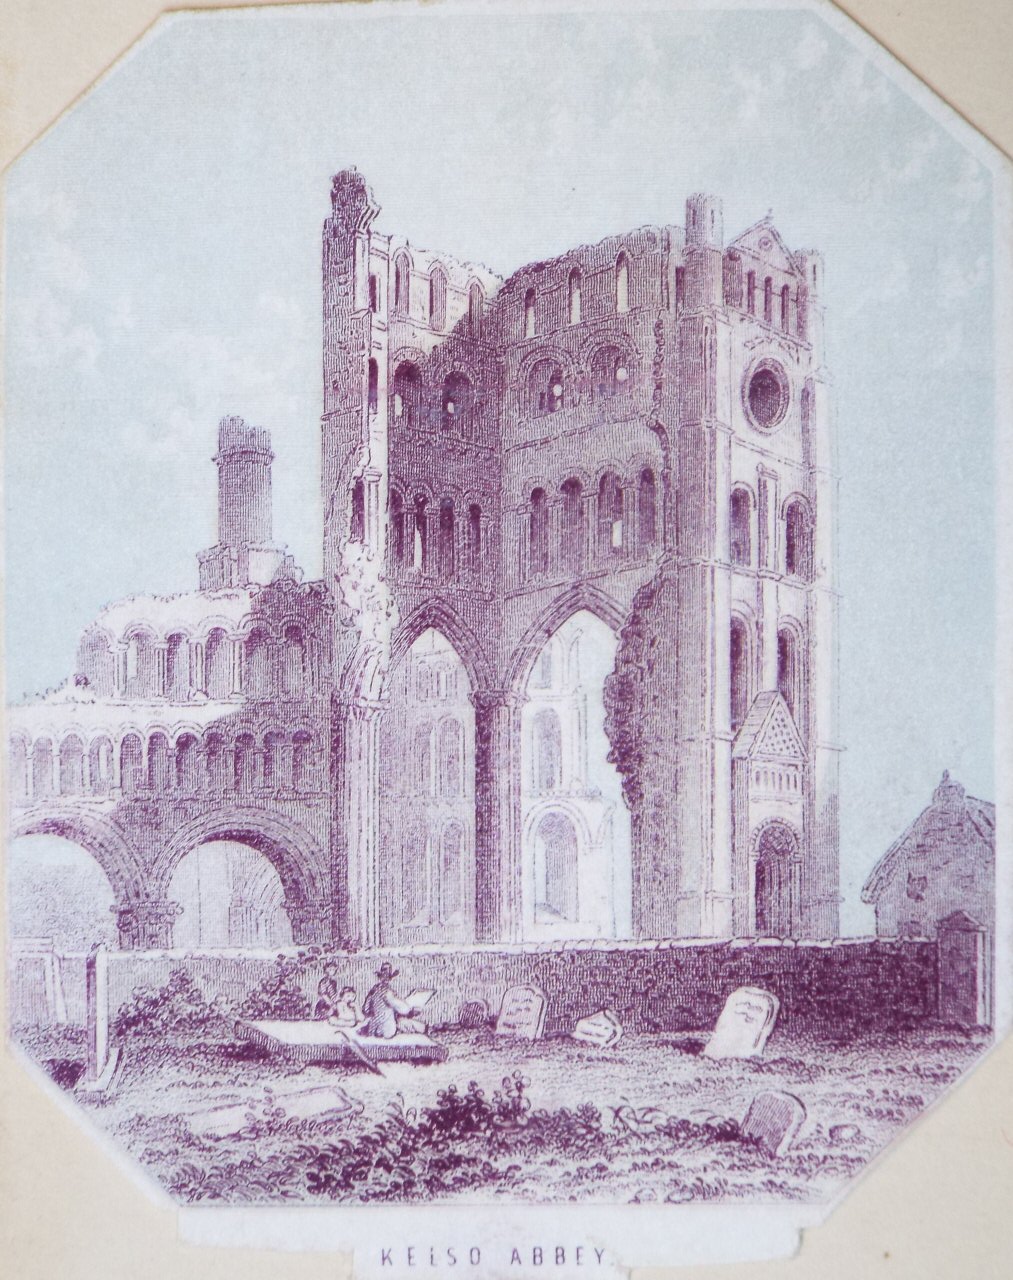 Chromo-lithograph - Kelso Abbey